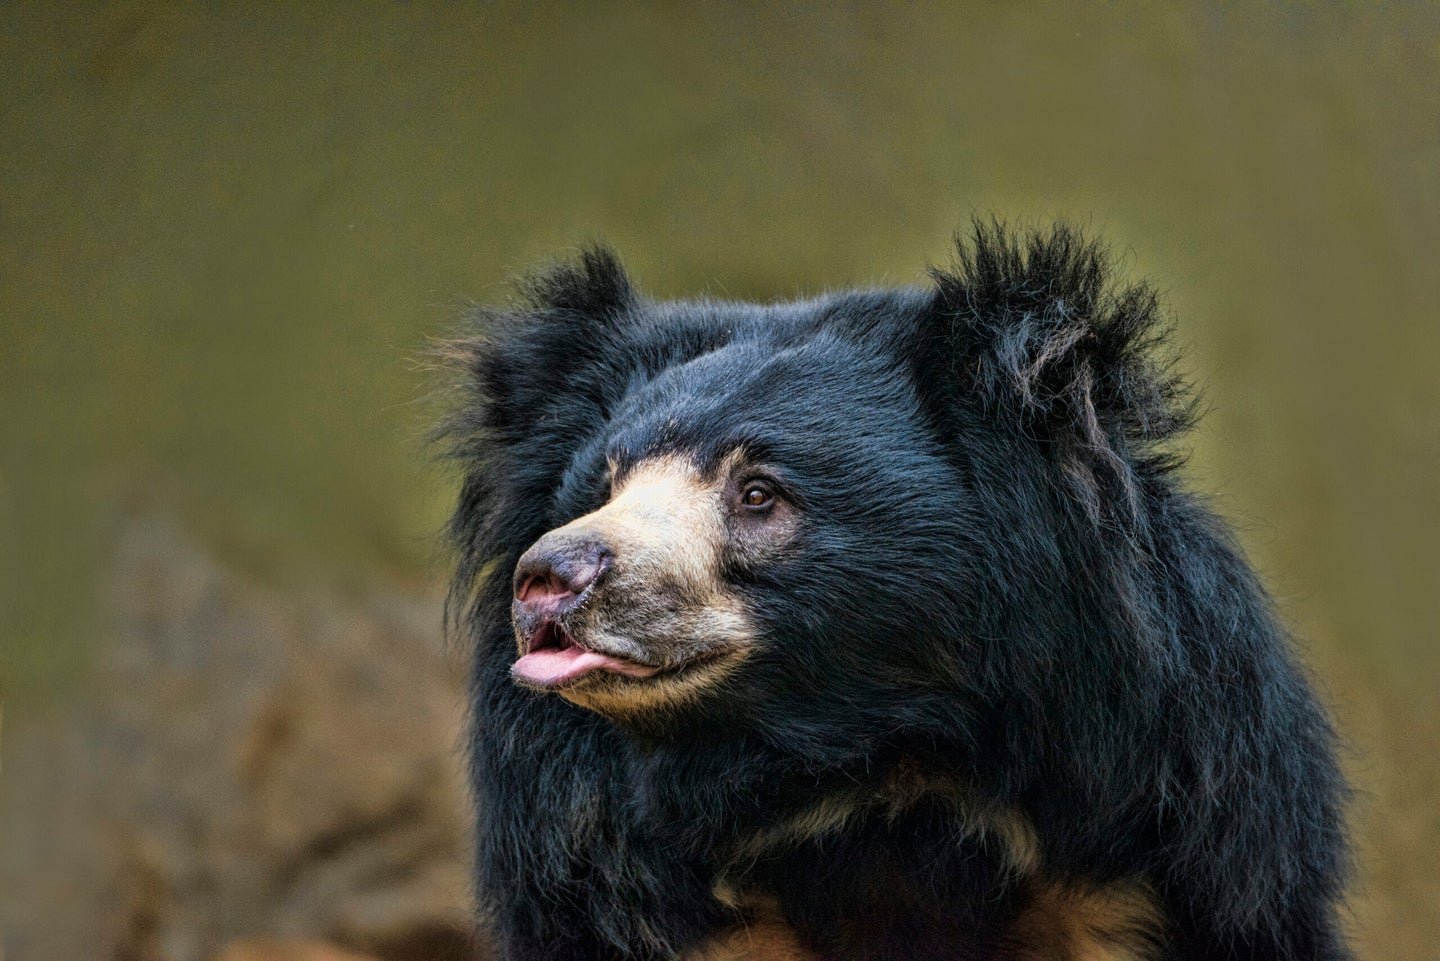 Rabid Sloth Bear Attacks and Kills Couple in Central India